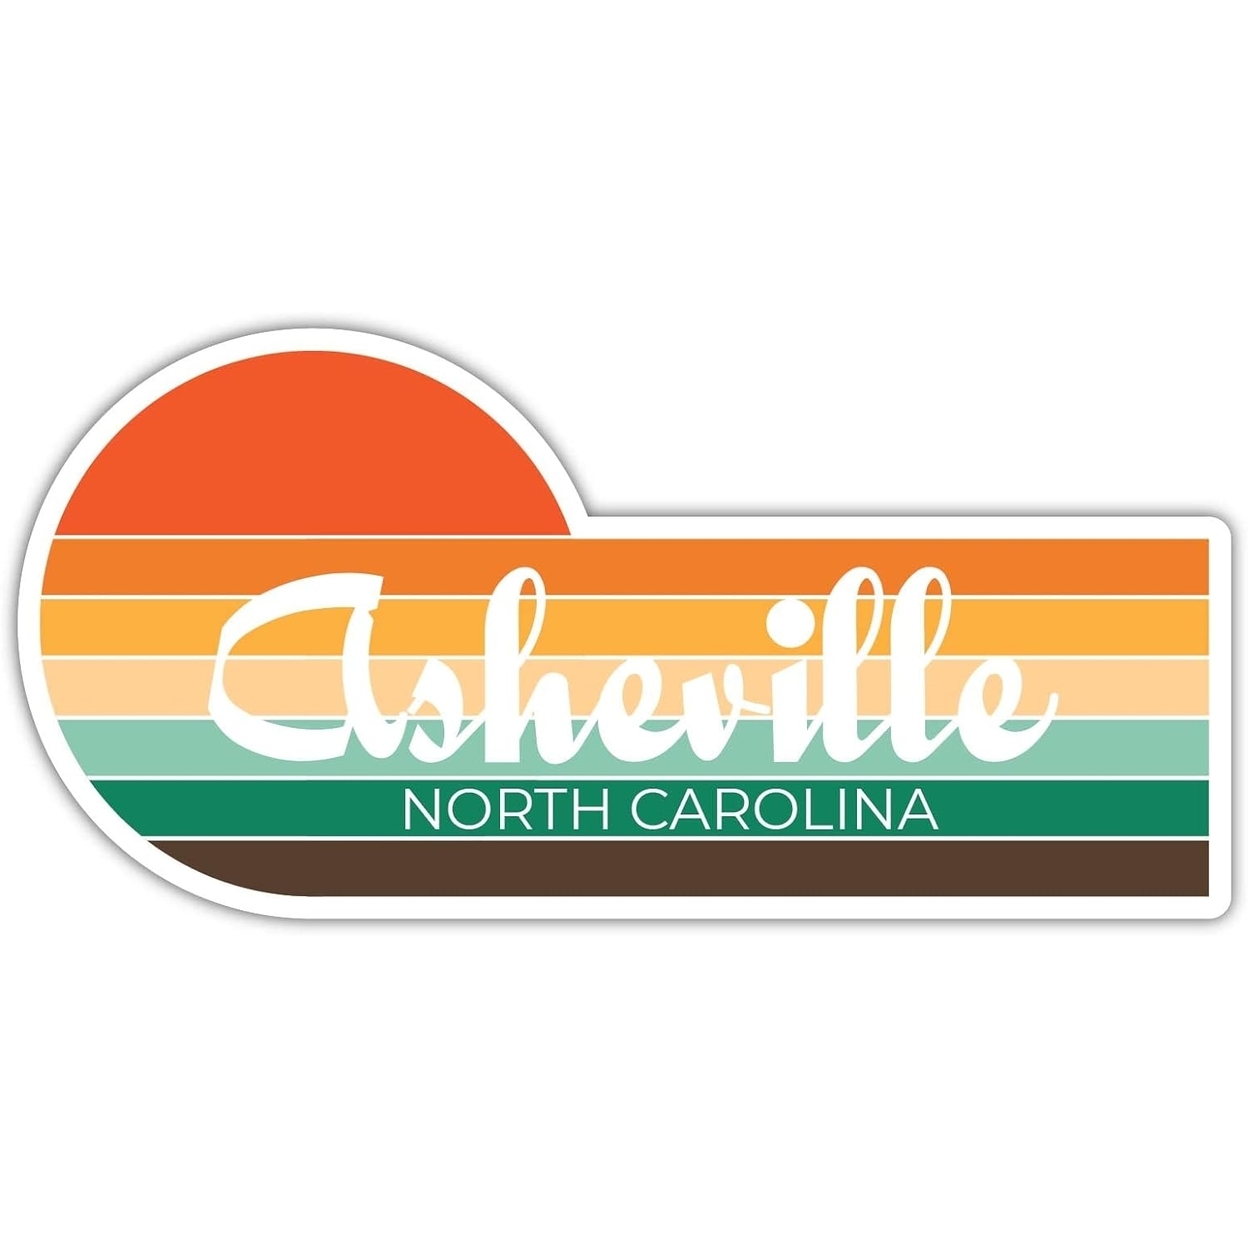 Asheville North Carolina Sticker Retro Vintage Sunset City 70s Aesthetic Design - 2 Inch